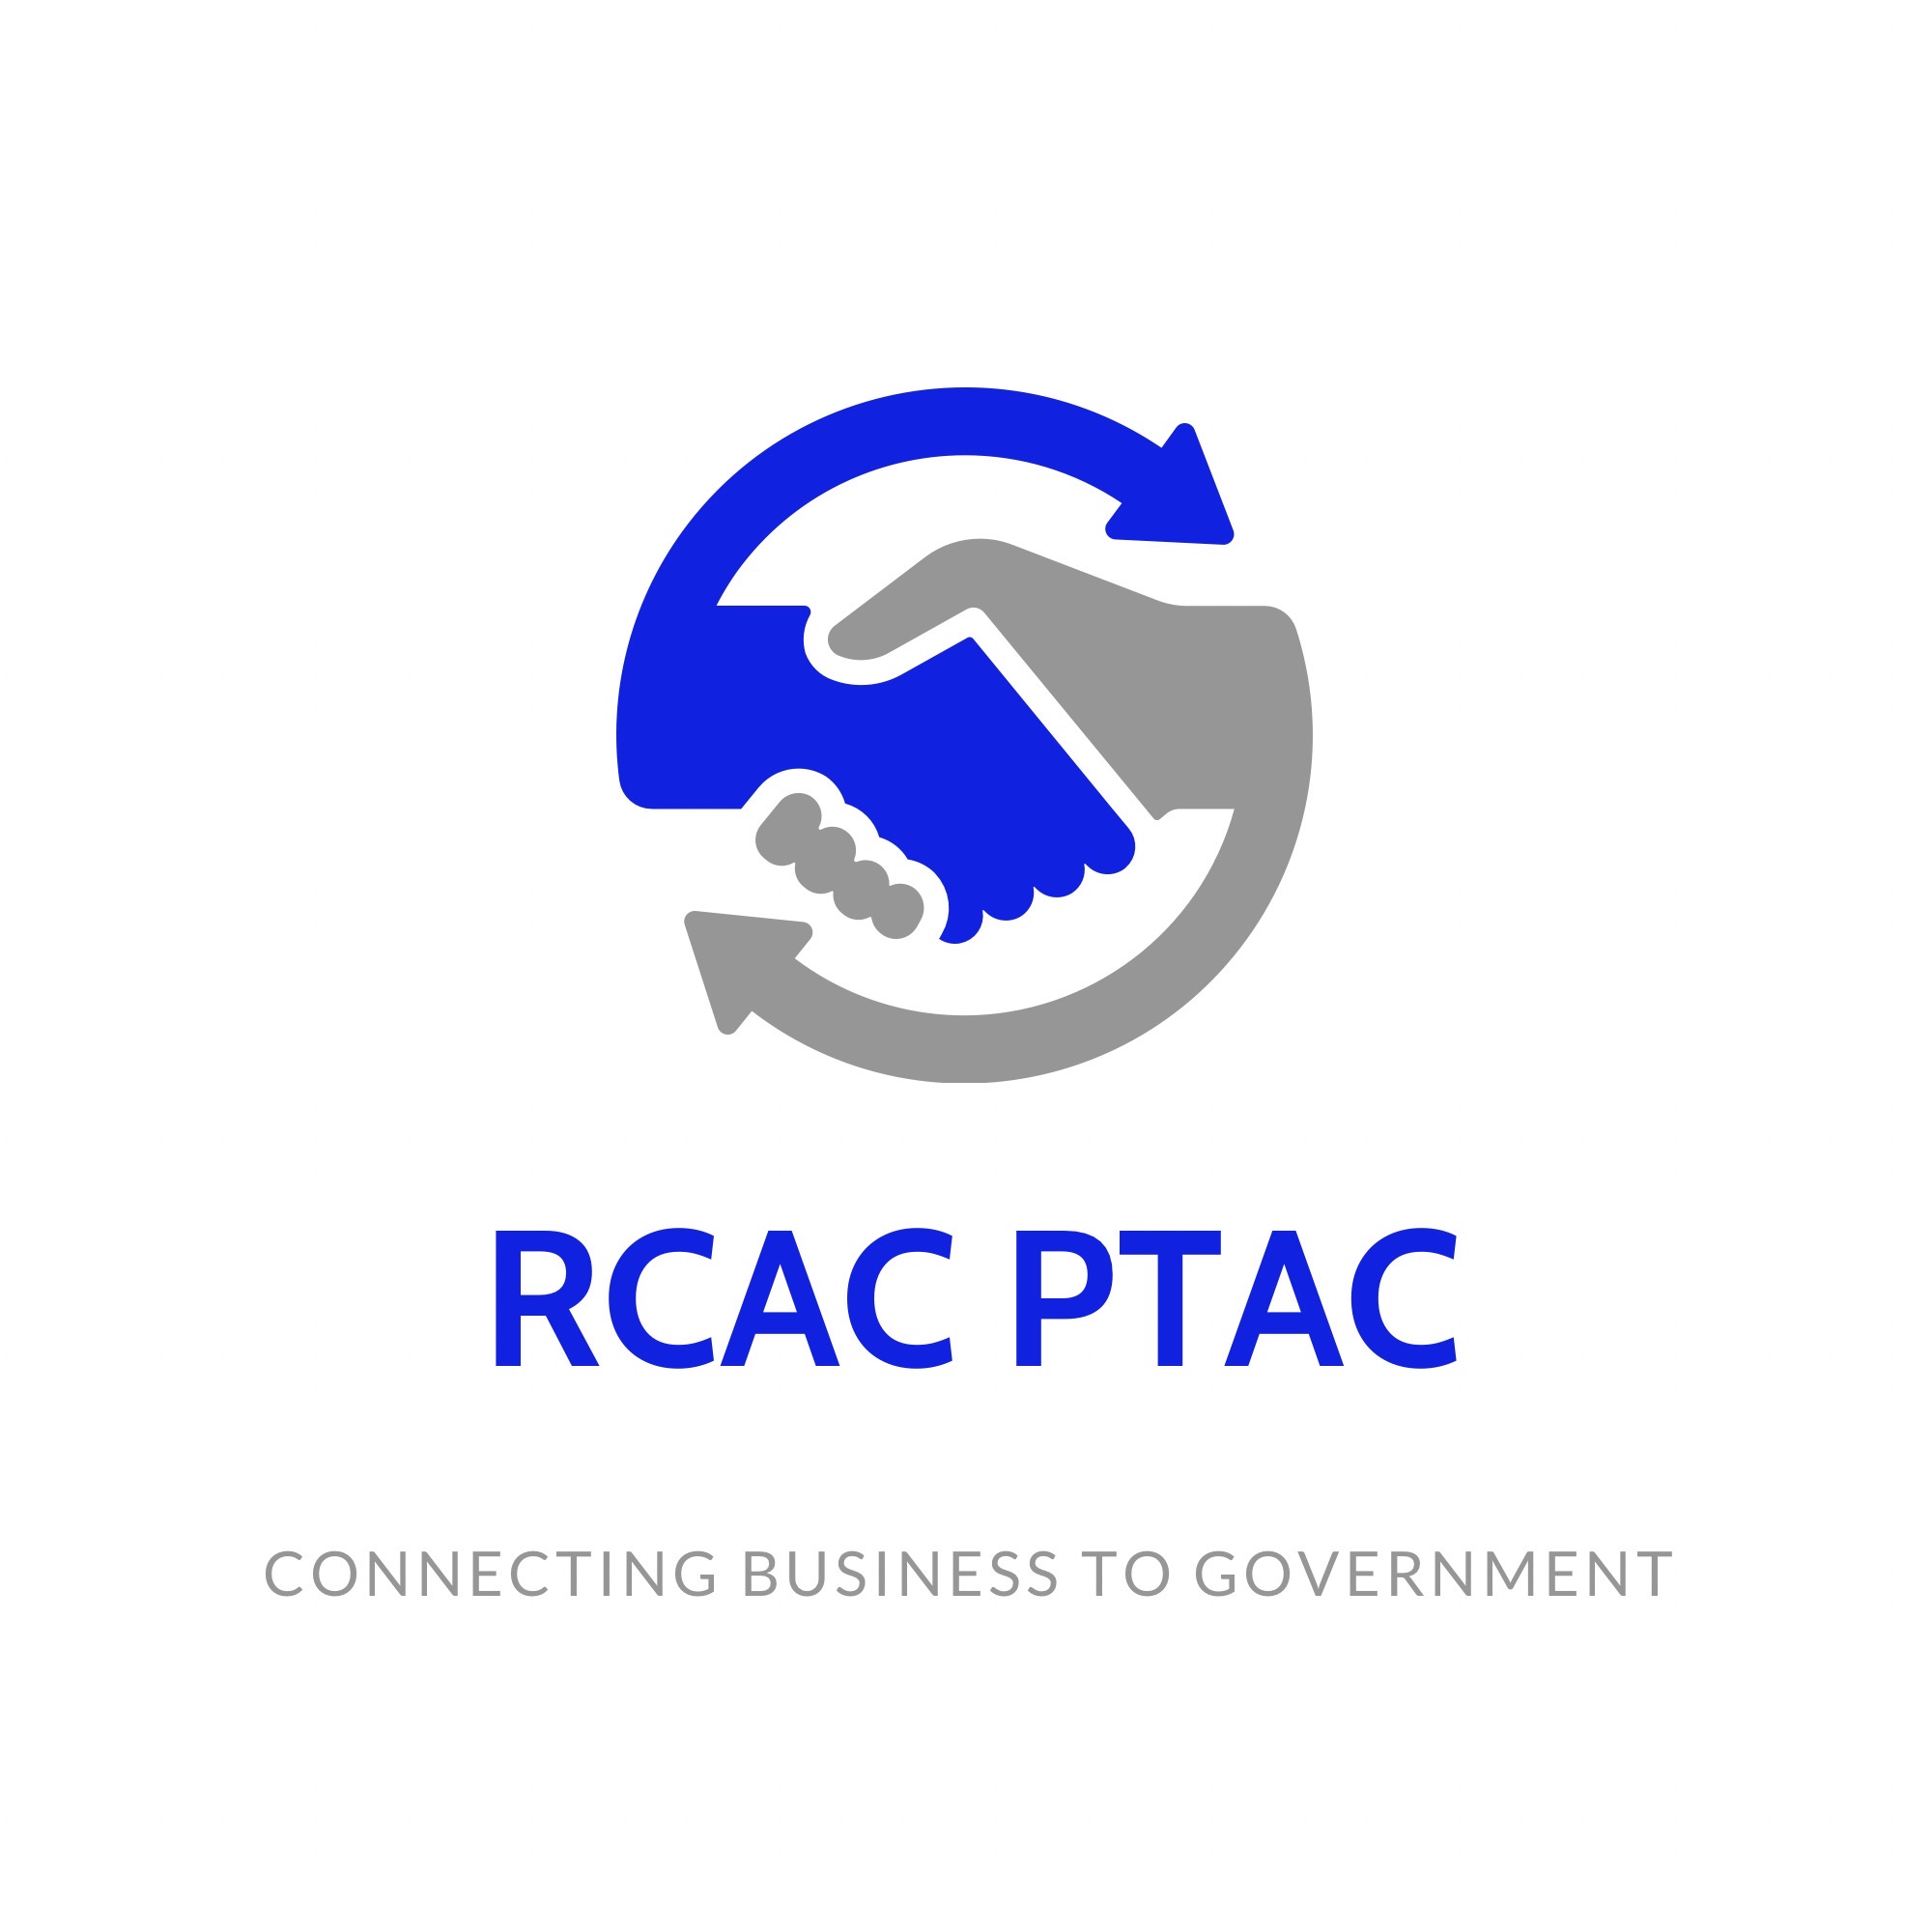 RCAC PTAC